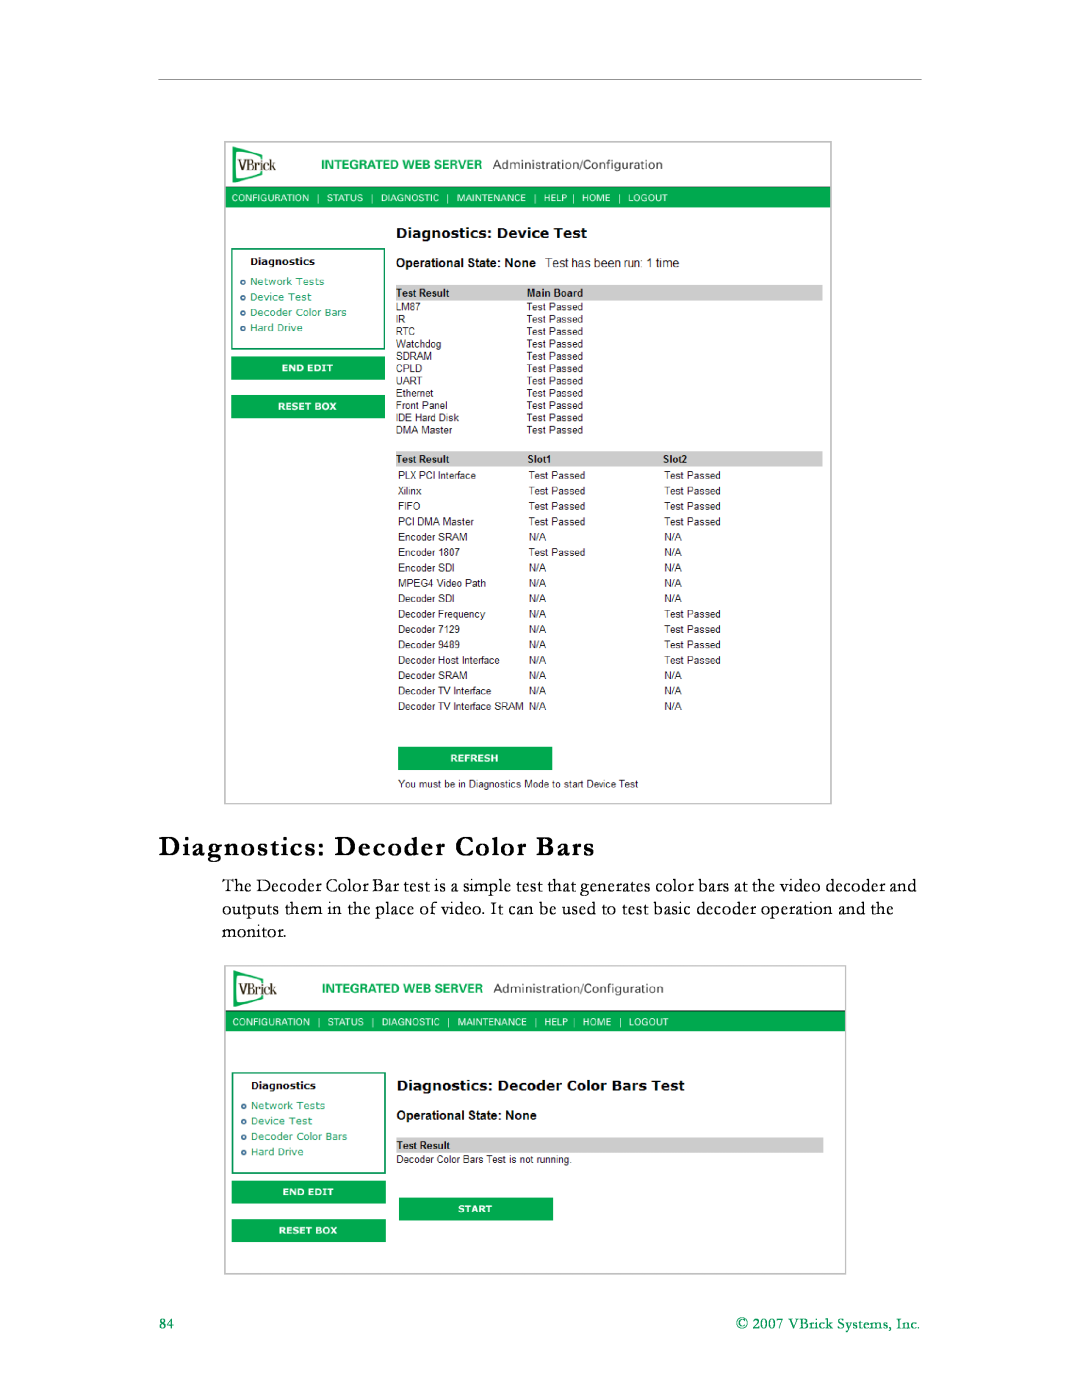 VBrick Systems VB5000, VB6000, VB4000 manual Diagnostics Decoder Color Bars, VBrick Systems, Inc 